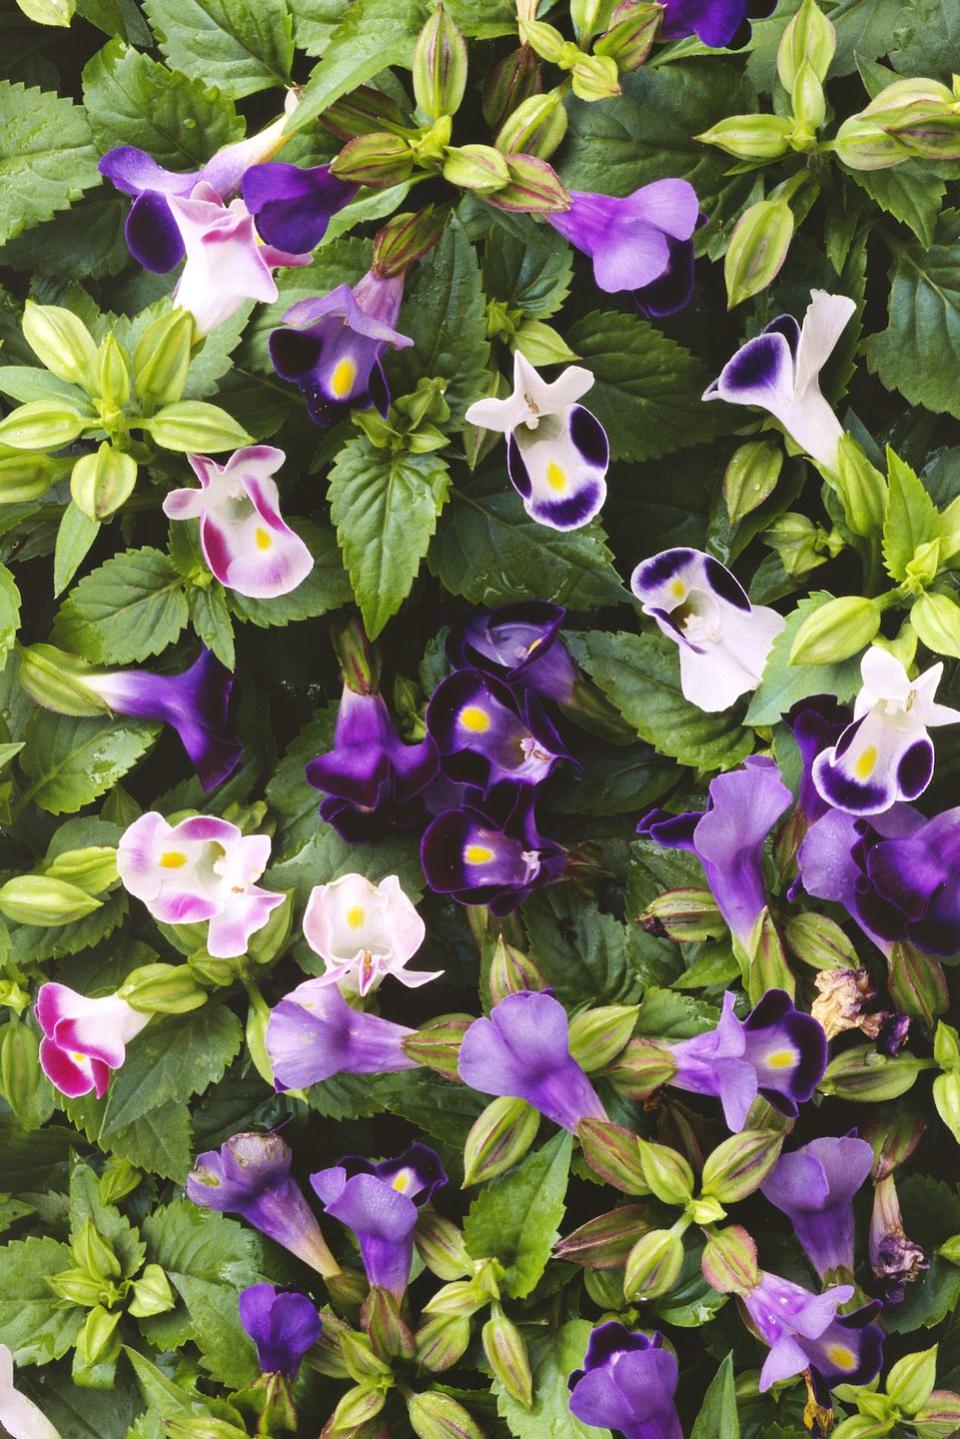 patio plants, close up of white and purple torenia flowers